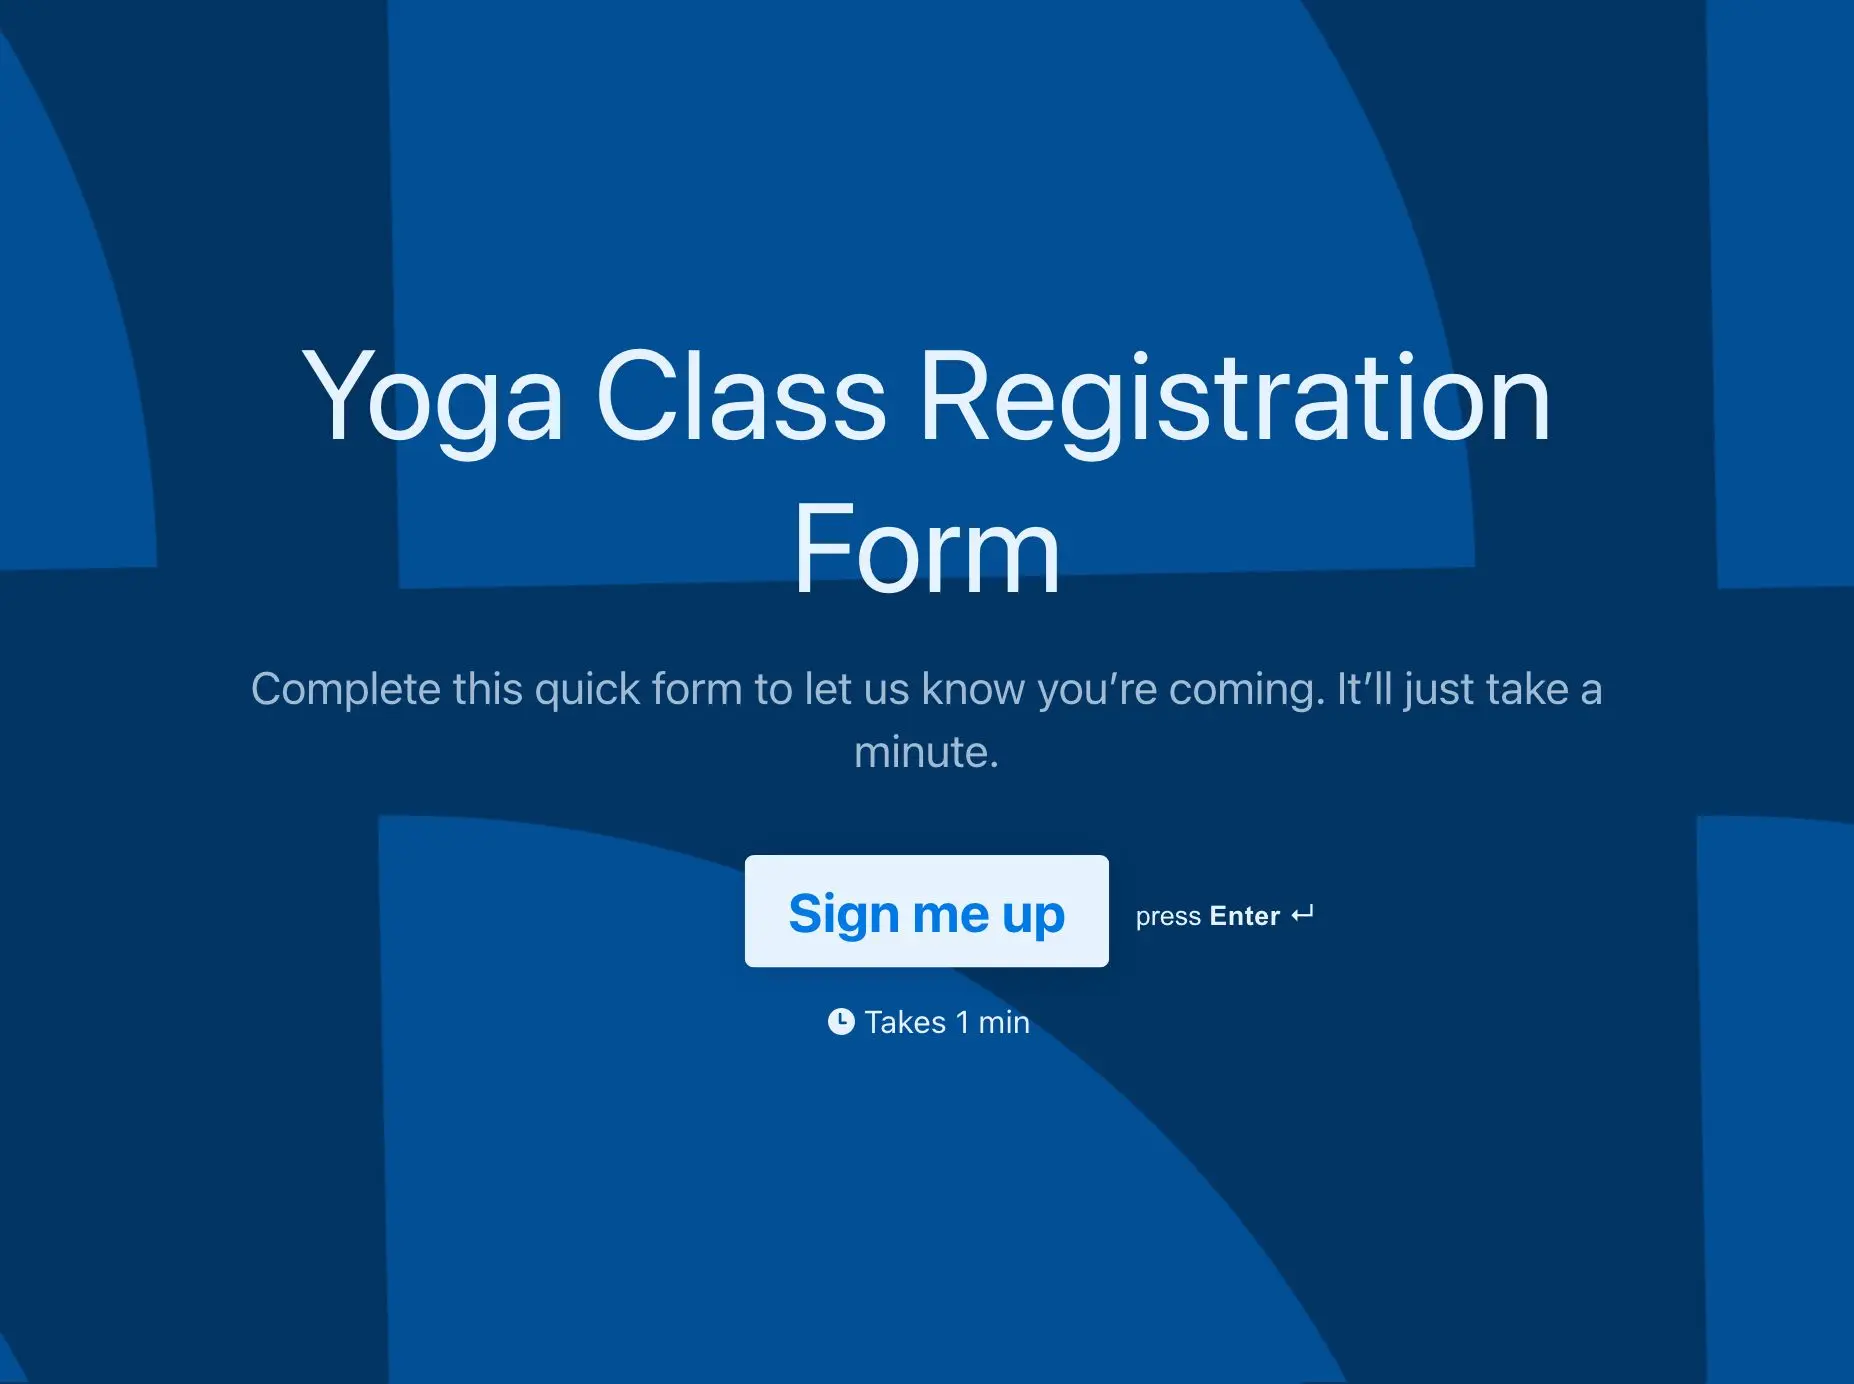 Yoga Class Registration Form Template Hero